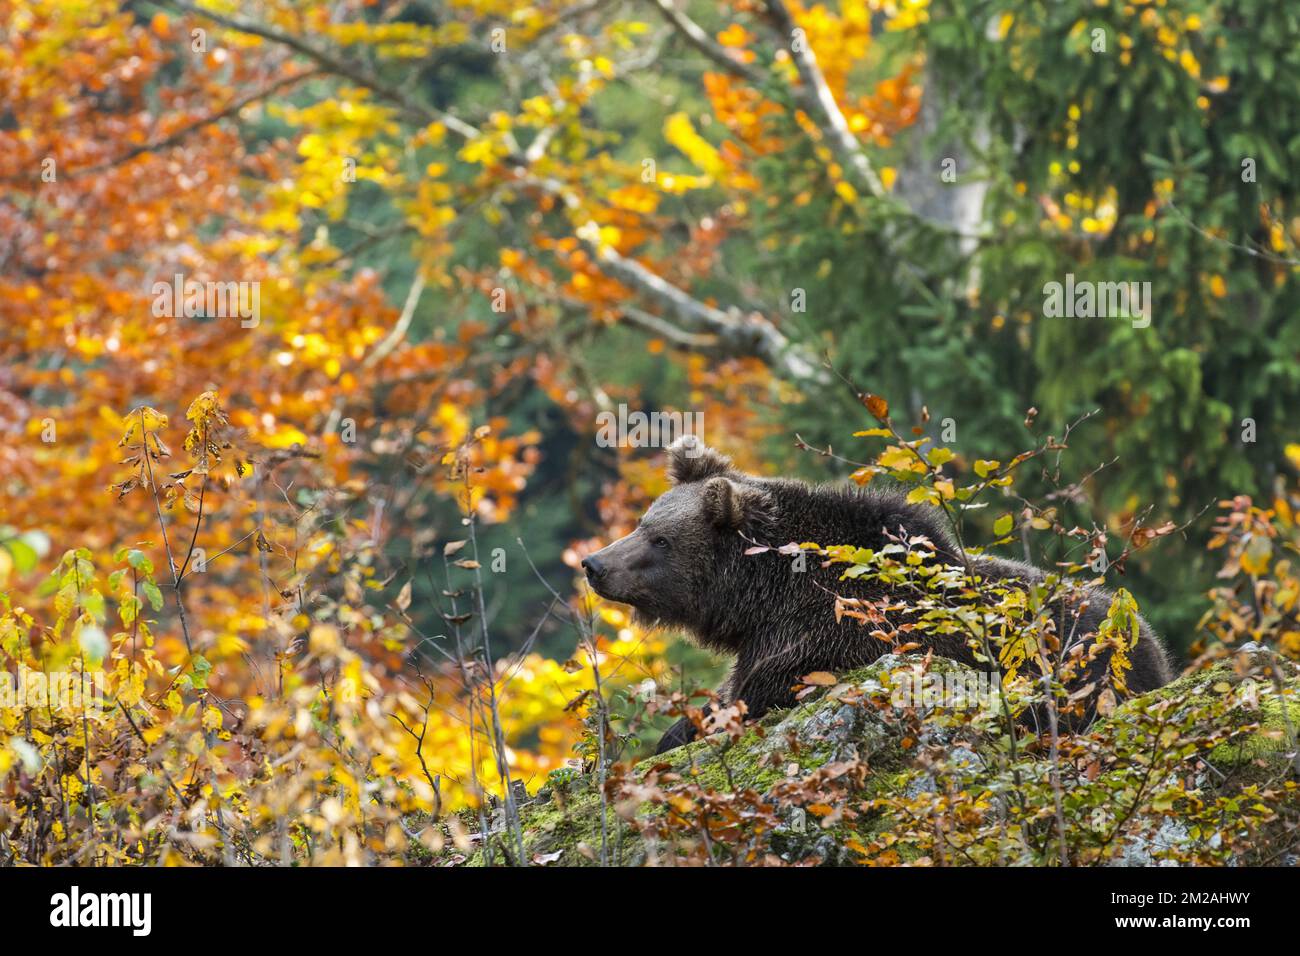 Orso bruno europeo (Ursus arctos arctos) foraggio in foresta con fogliame che mostra colori autunnali | Ours brun d'Europe (Ursus arctos arctos) 18/10/2017 Foto Stock